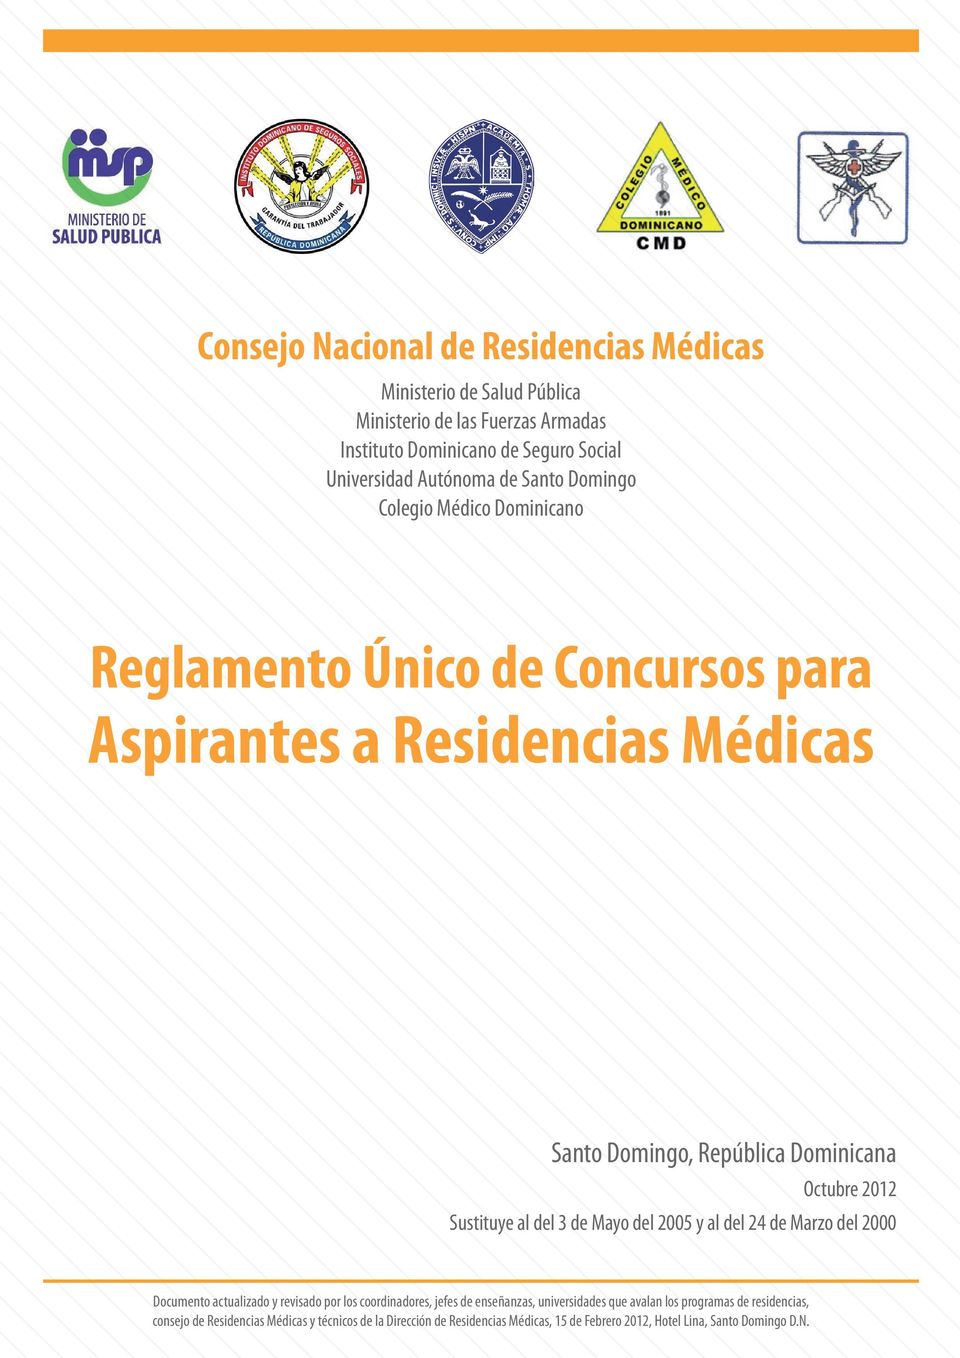 Médico Dominicano Reglamento Único de Concursos para Aspirantes a Residencias Médicas Santo